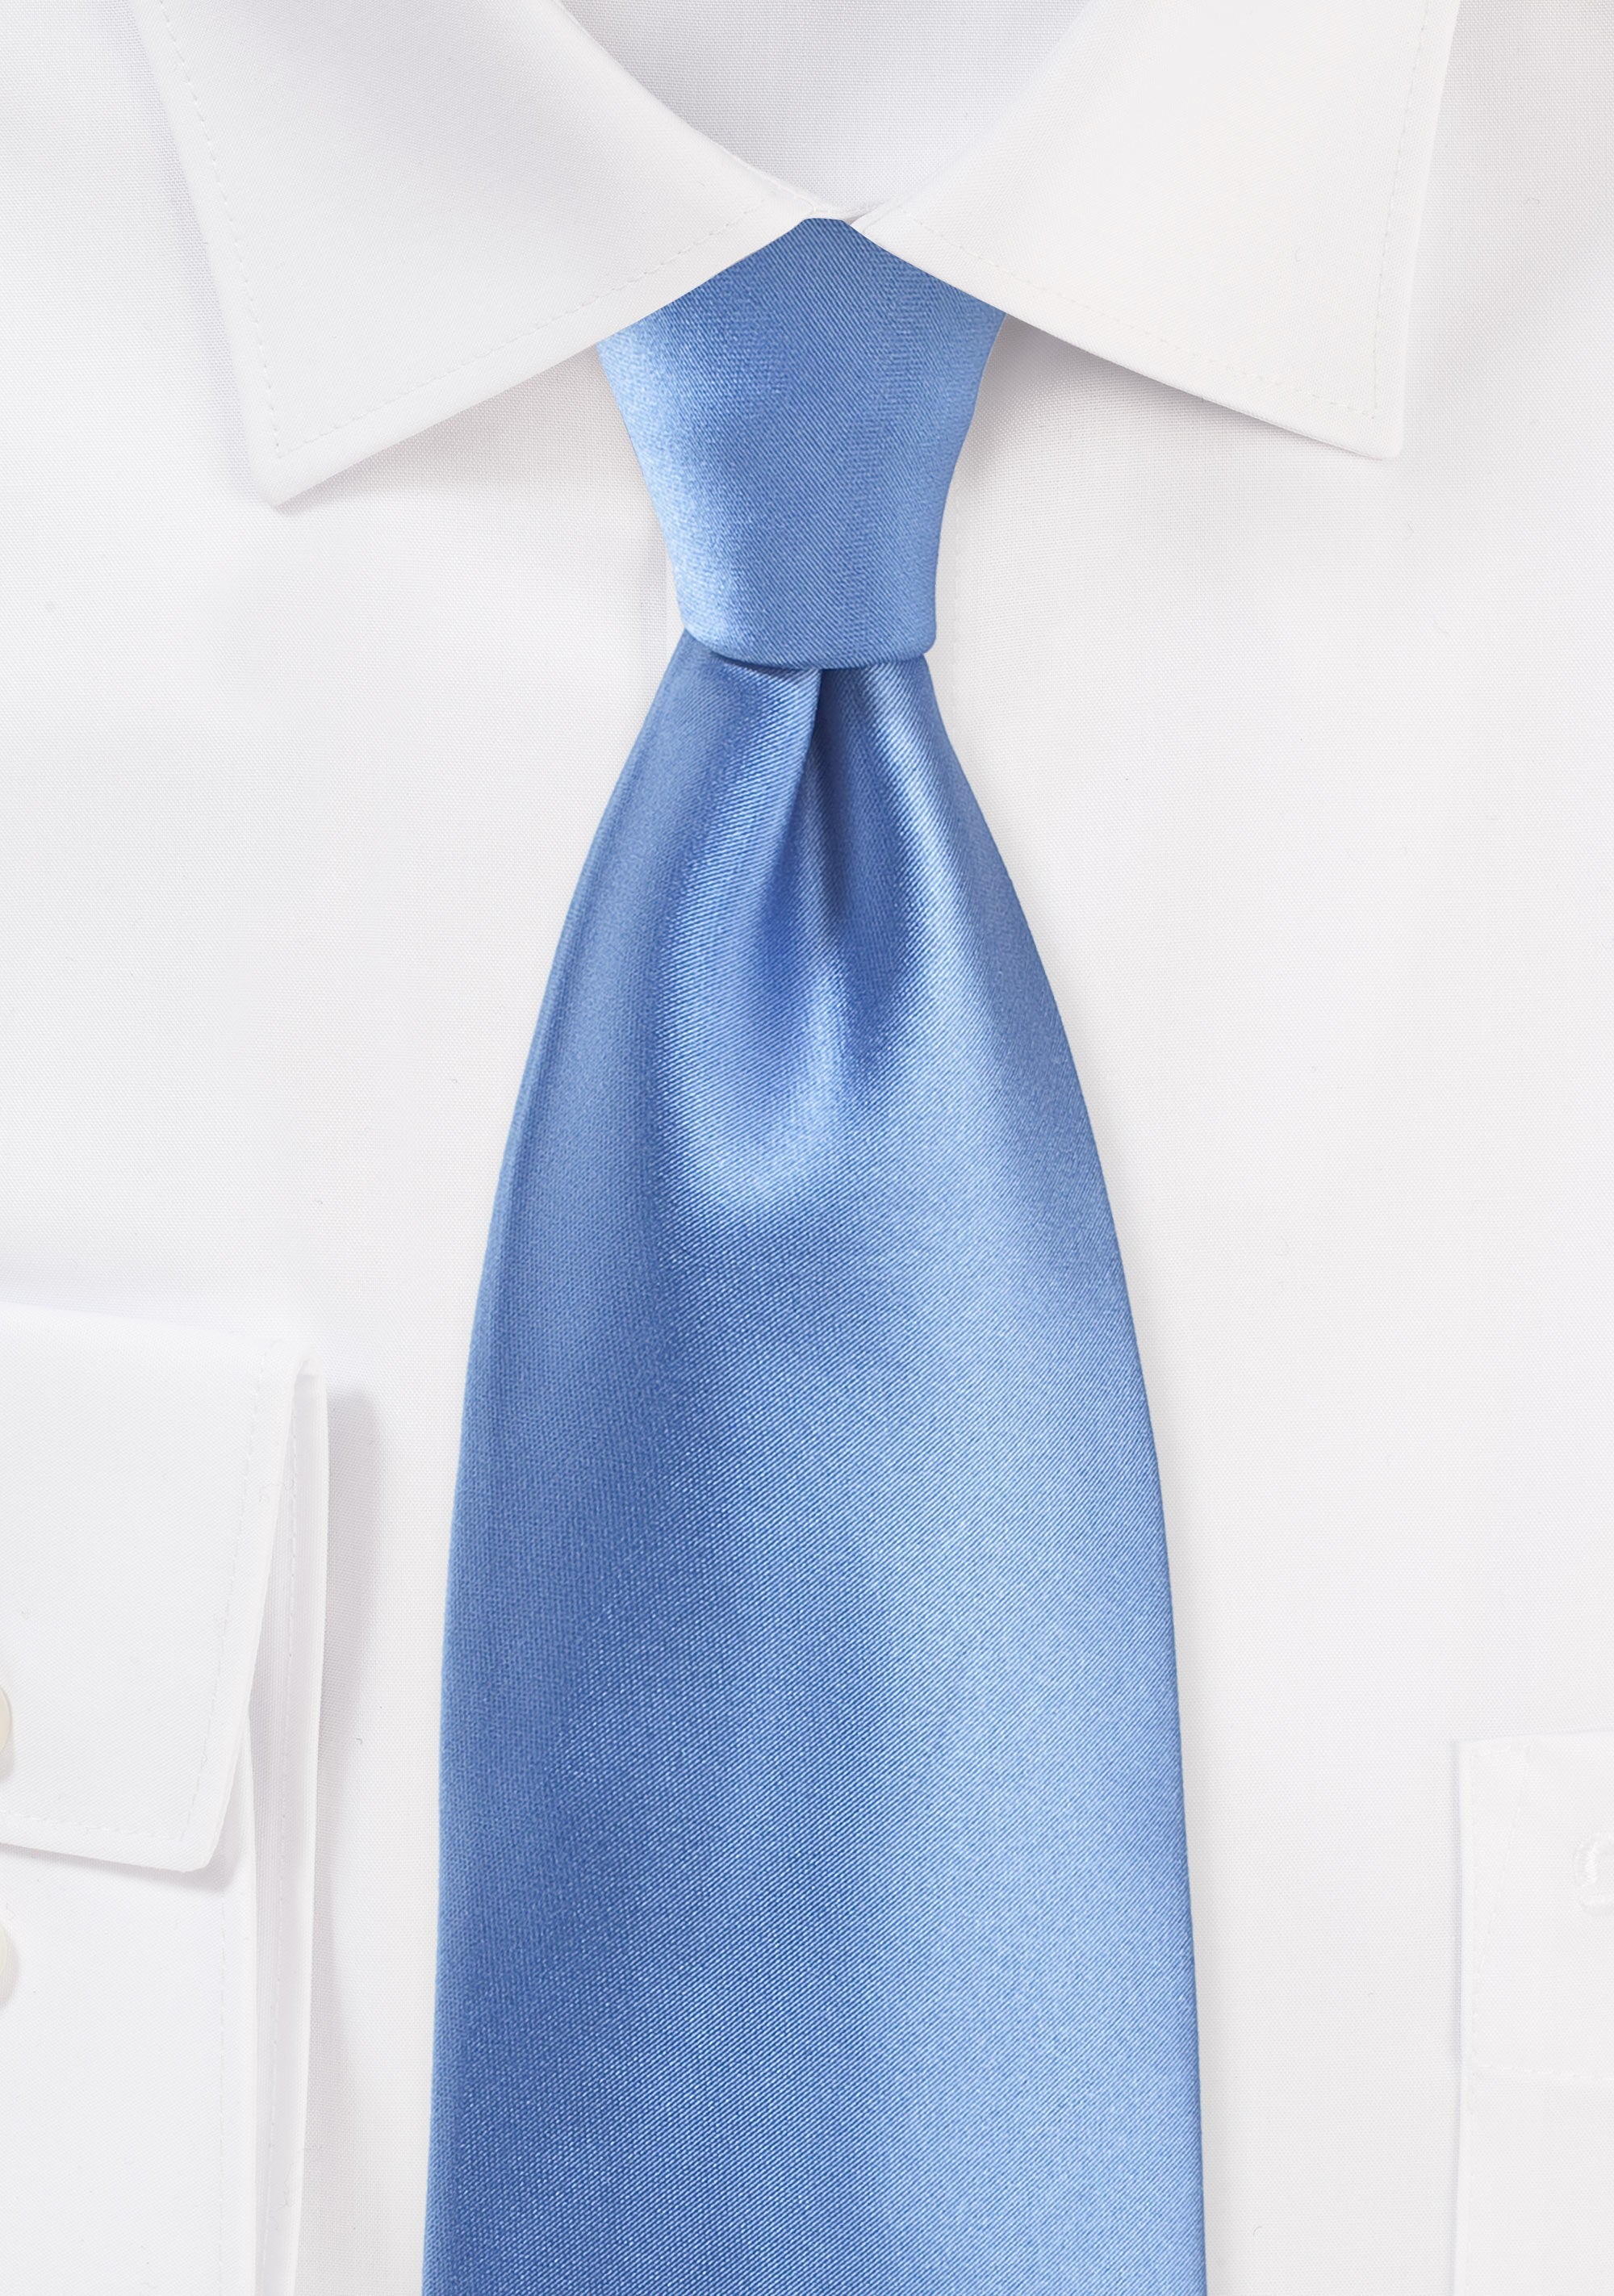 Periwinkle Solid Necktie